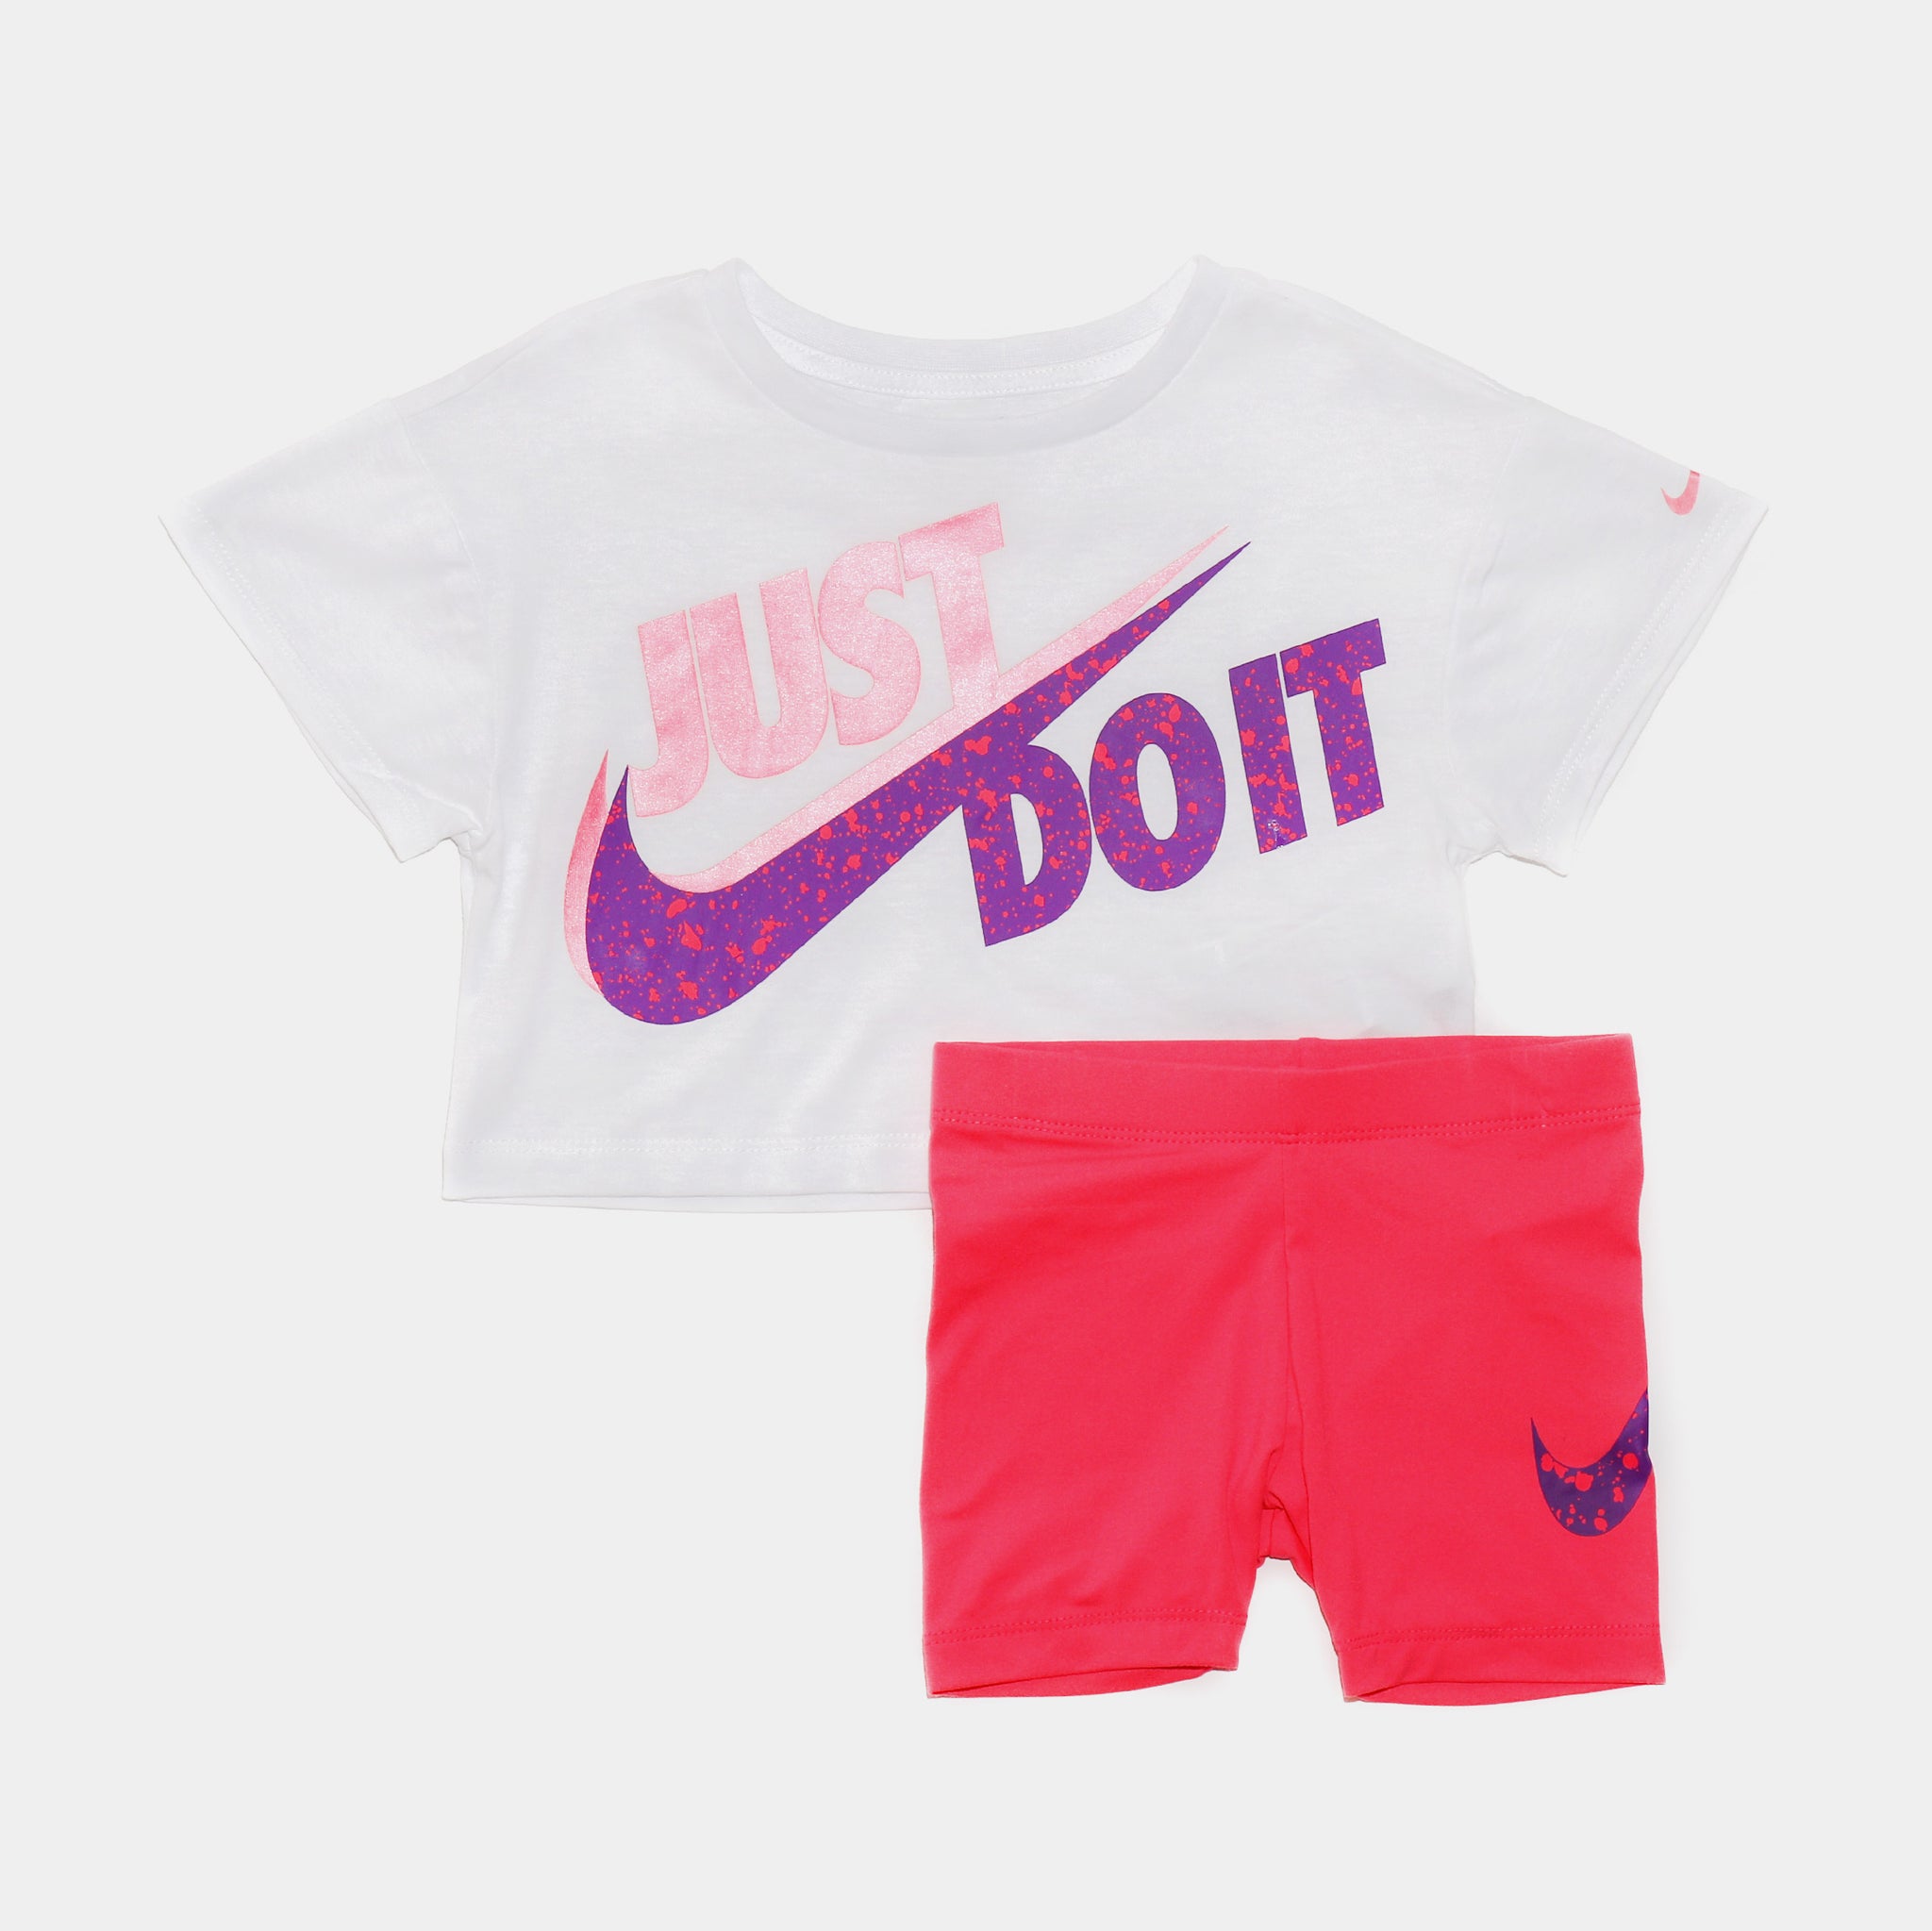 Nike Boxy Tee and Bike Short Set Infant Toddler Set Pink 26J291